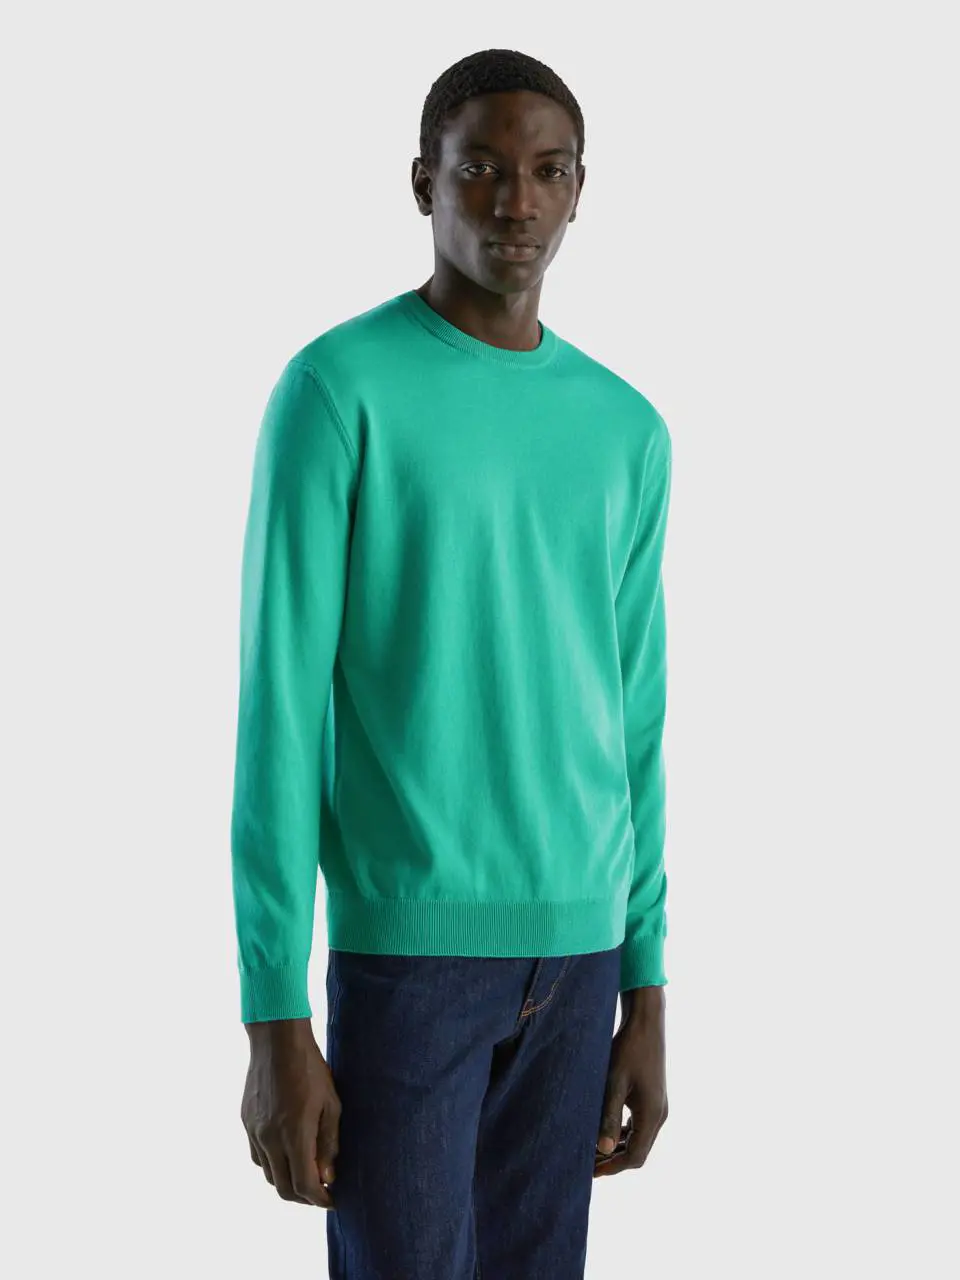 Benetton crew neck sweater in 100% cotton. 1